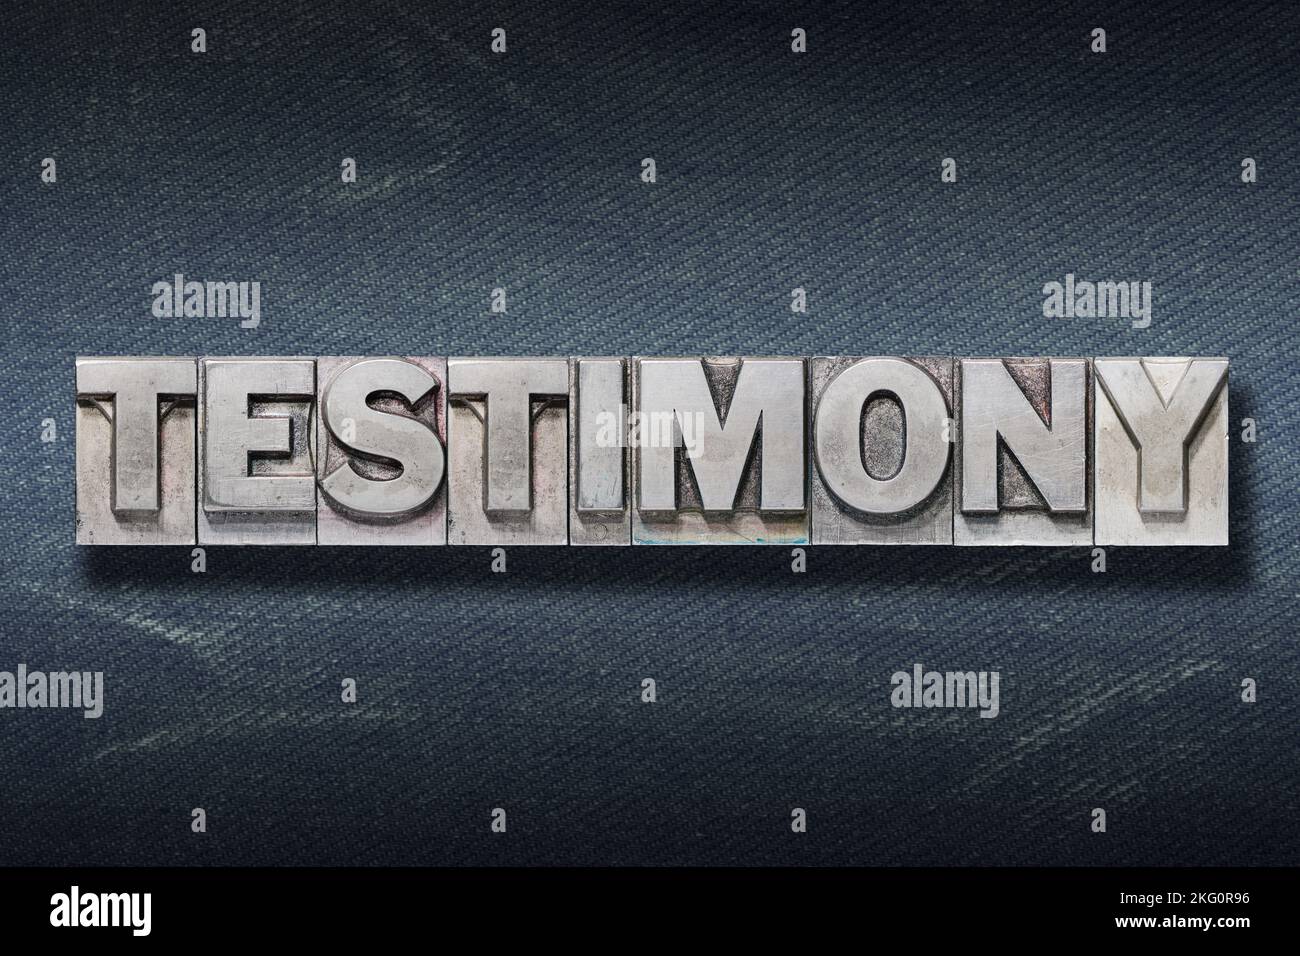 What is Testimony? on Vimeo